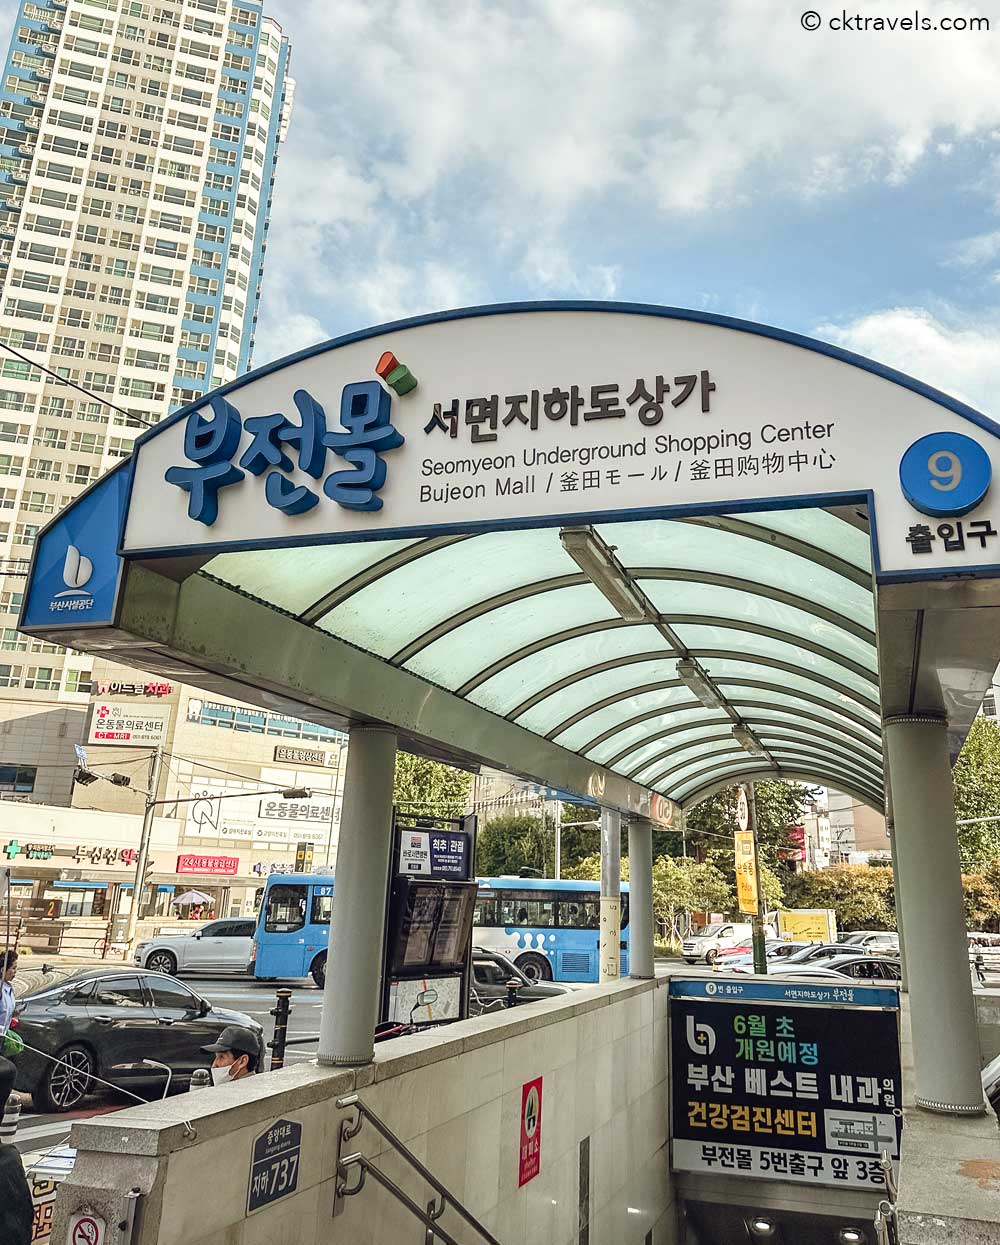 Seomyeon Underground Shopping Center